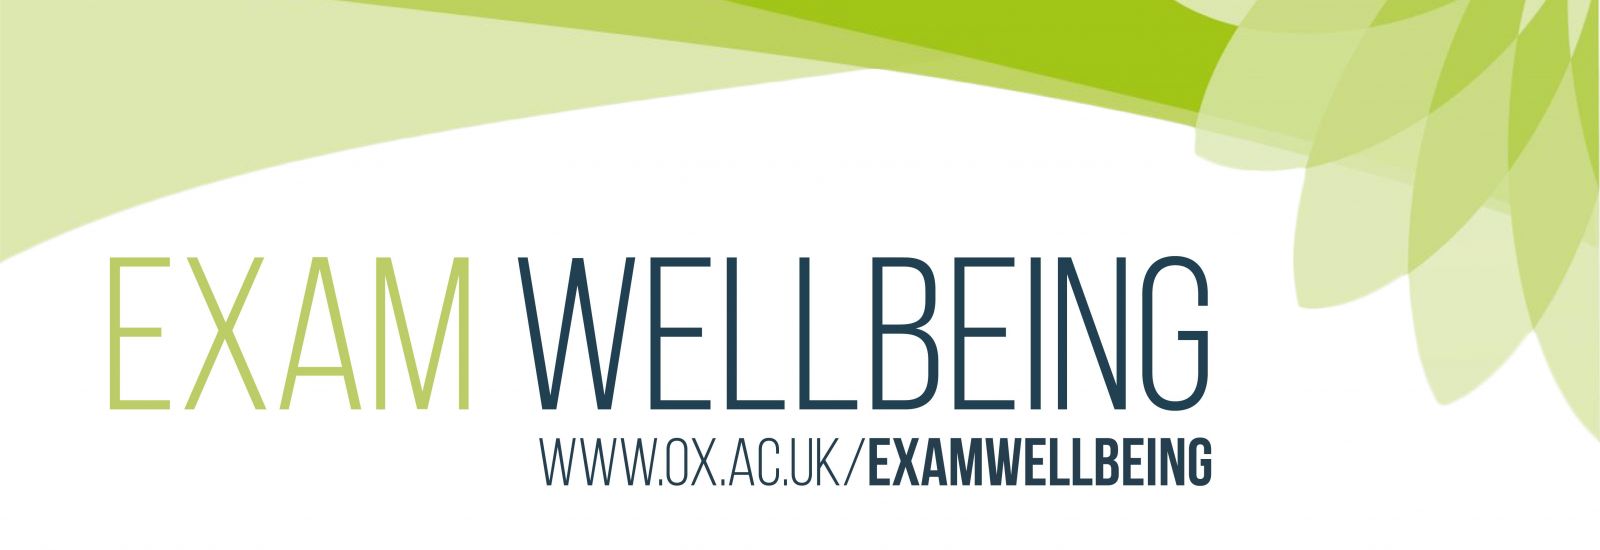 exam wellbeing